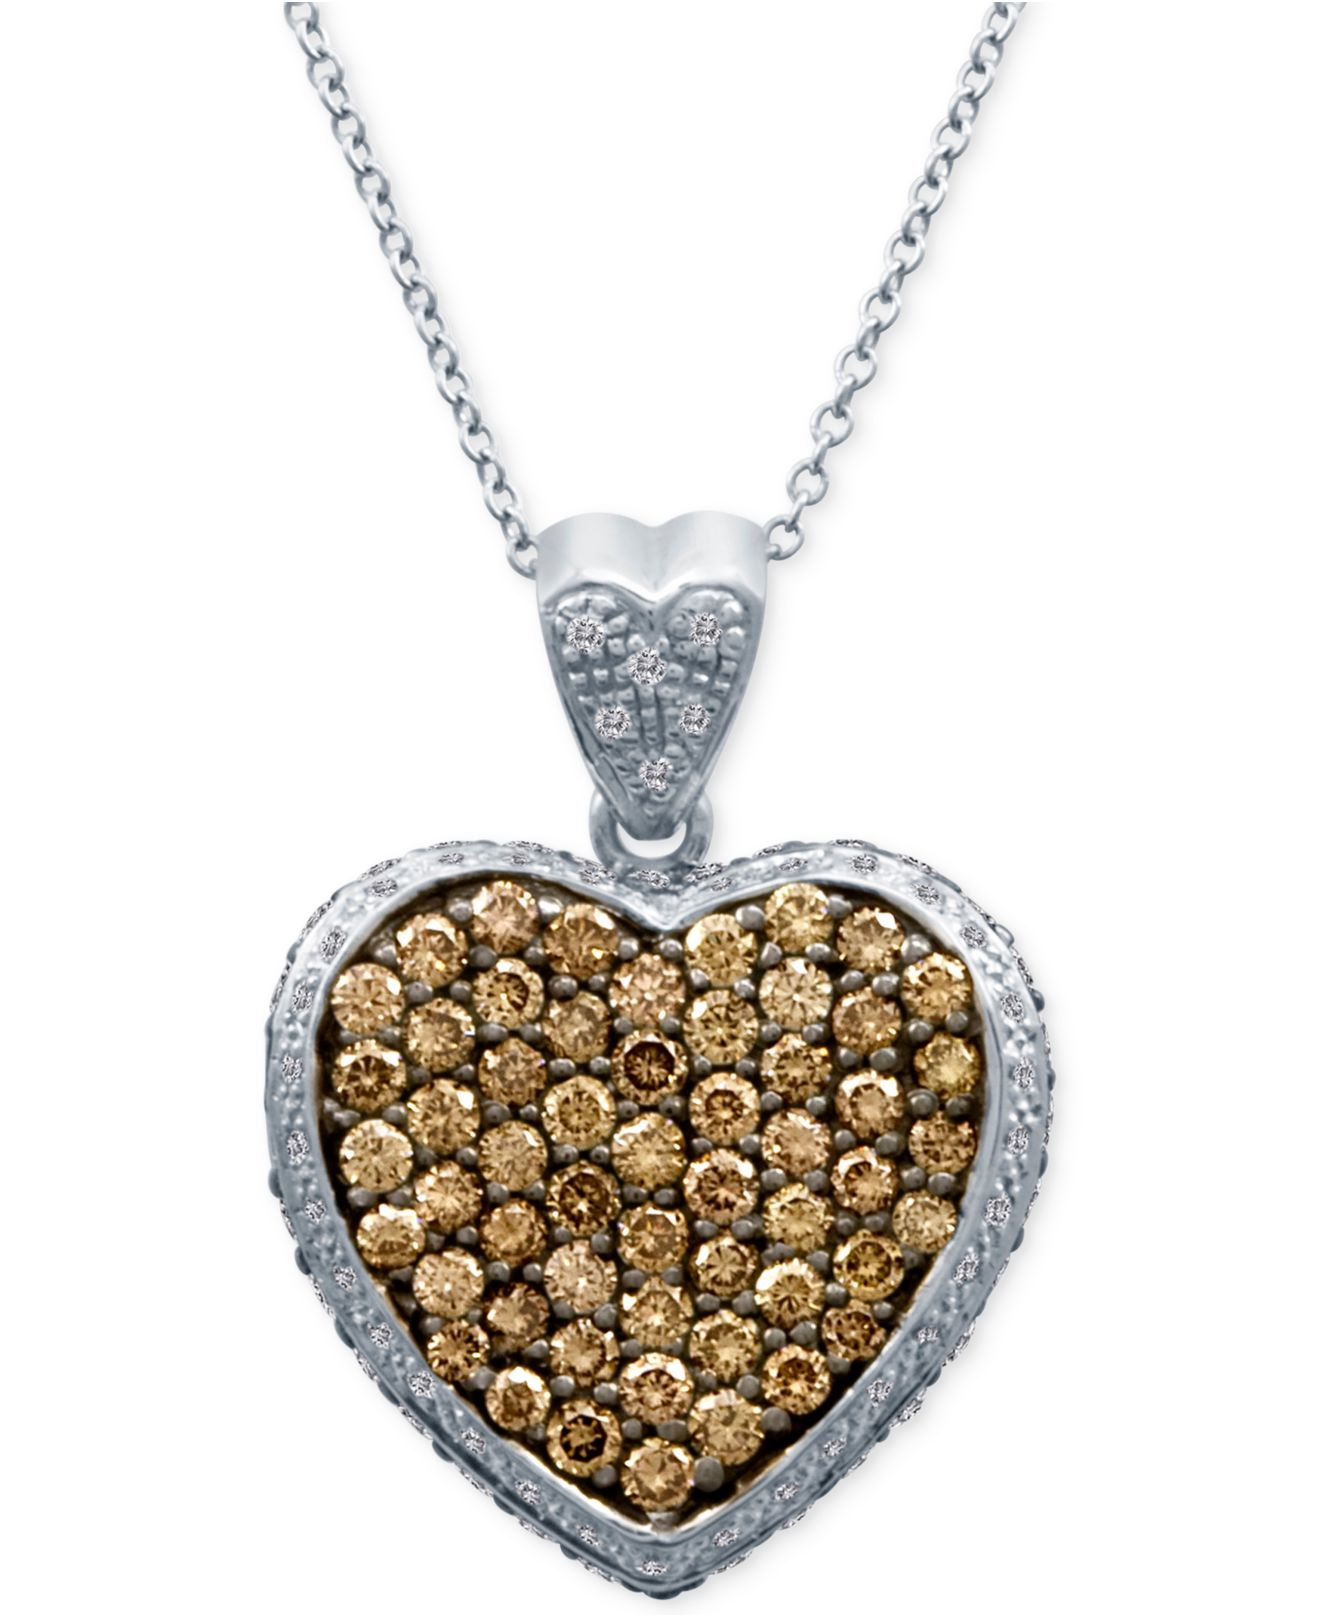 Lyst Le vian Chocolatier® Diamond Heart Pendant Necklace (17/8 Ct. T.w.) In 14k White Gold in